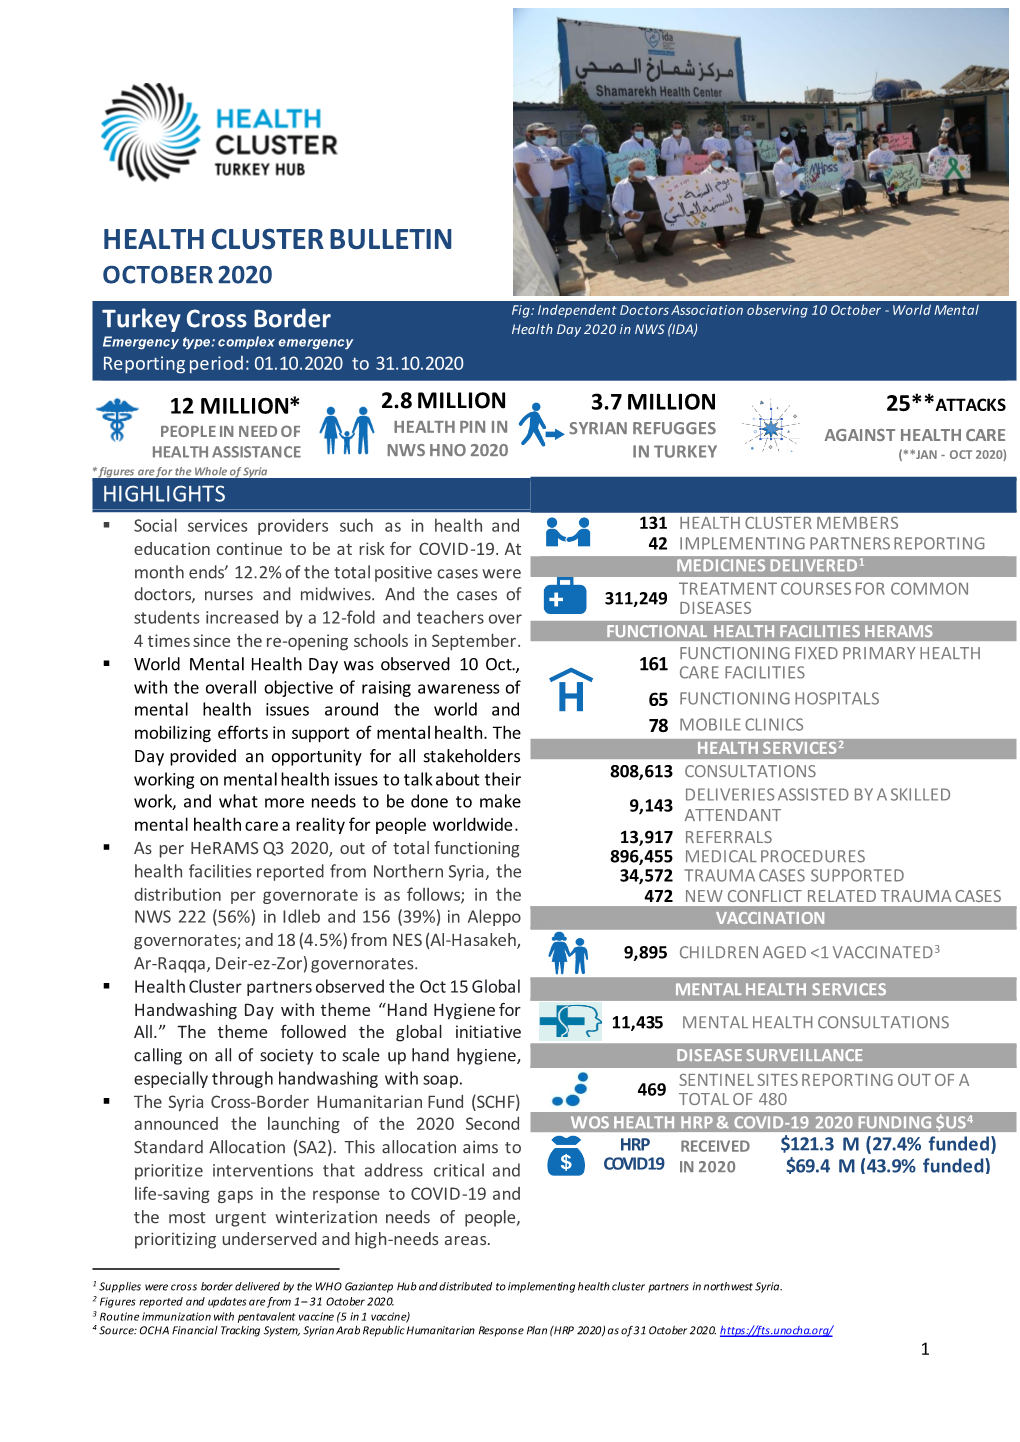 Health Cluster Bulletin, October 2020